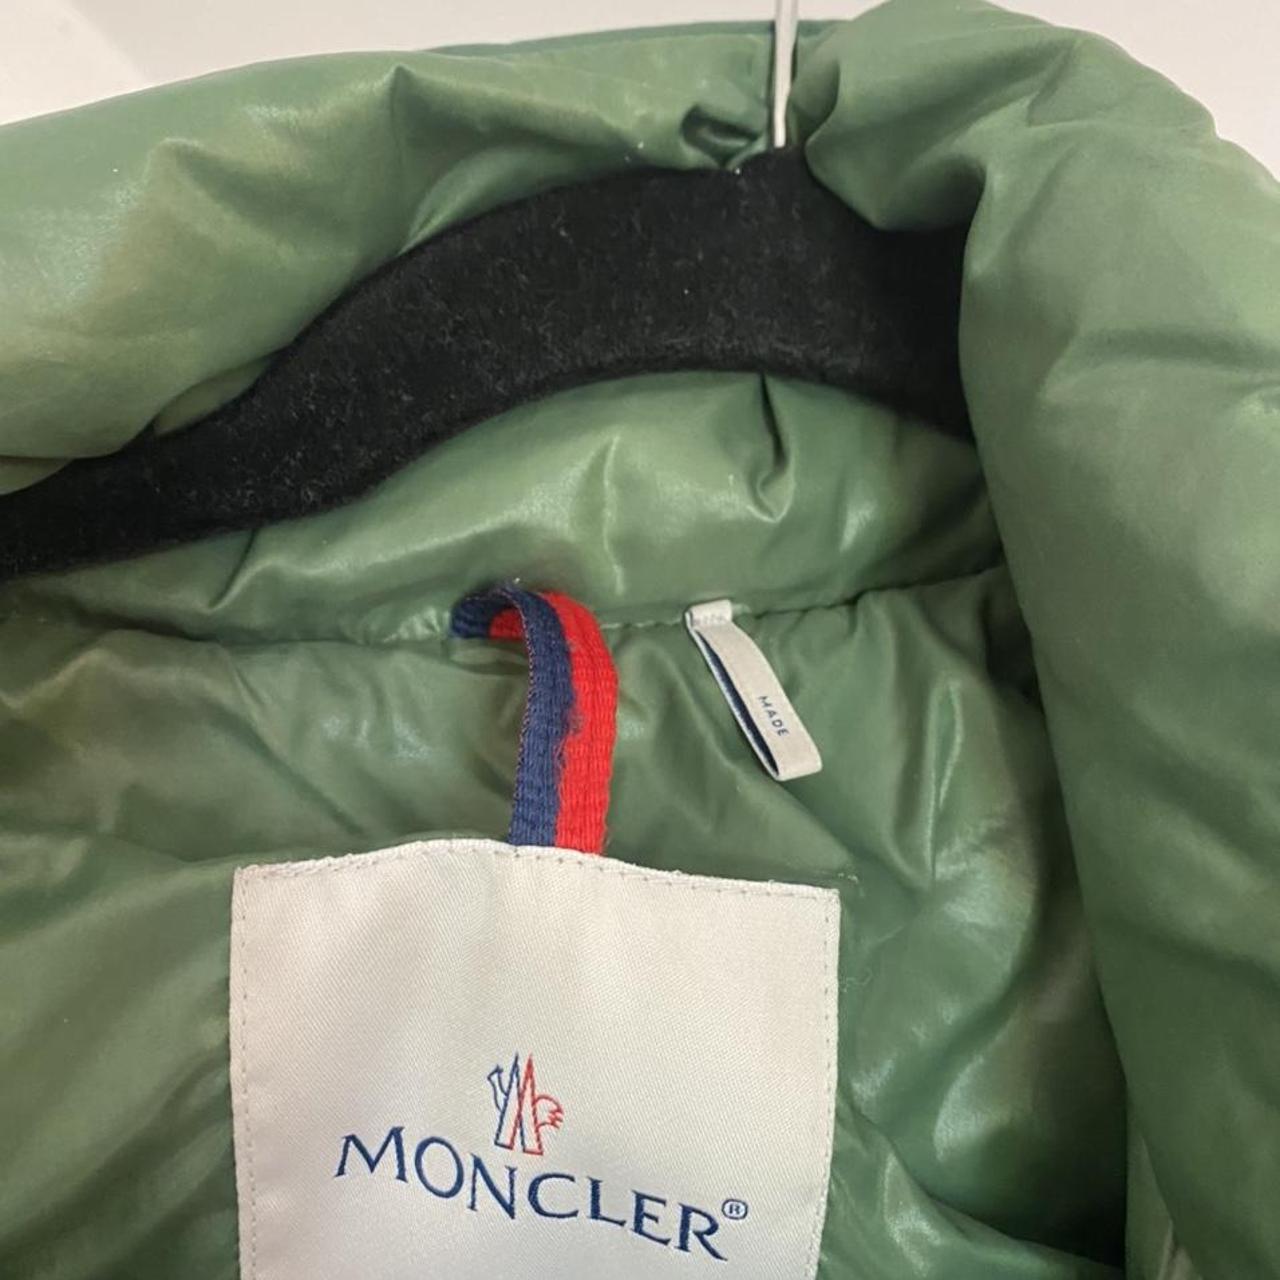 Product Image 2 - Beautiful Moncler vest. I believe